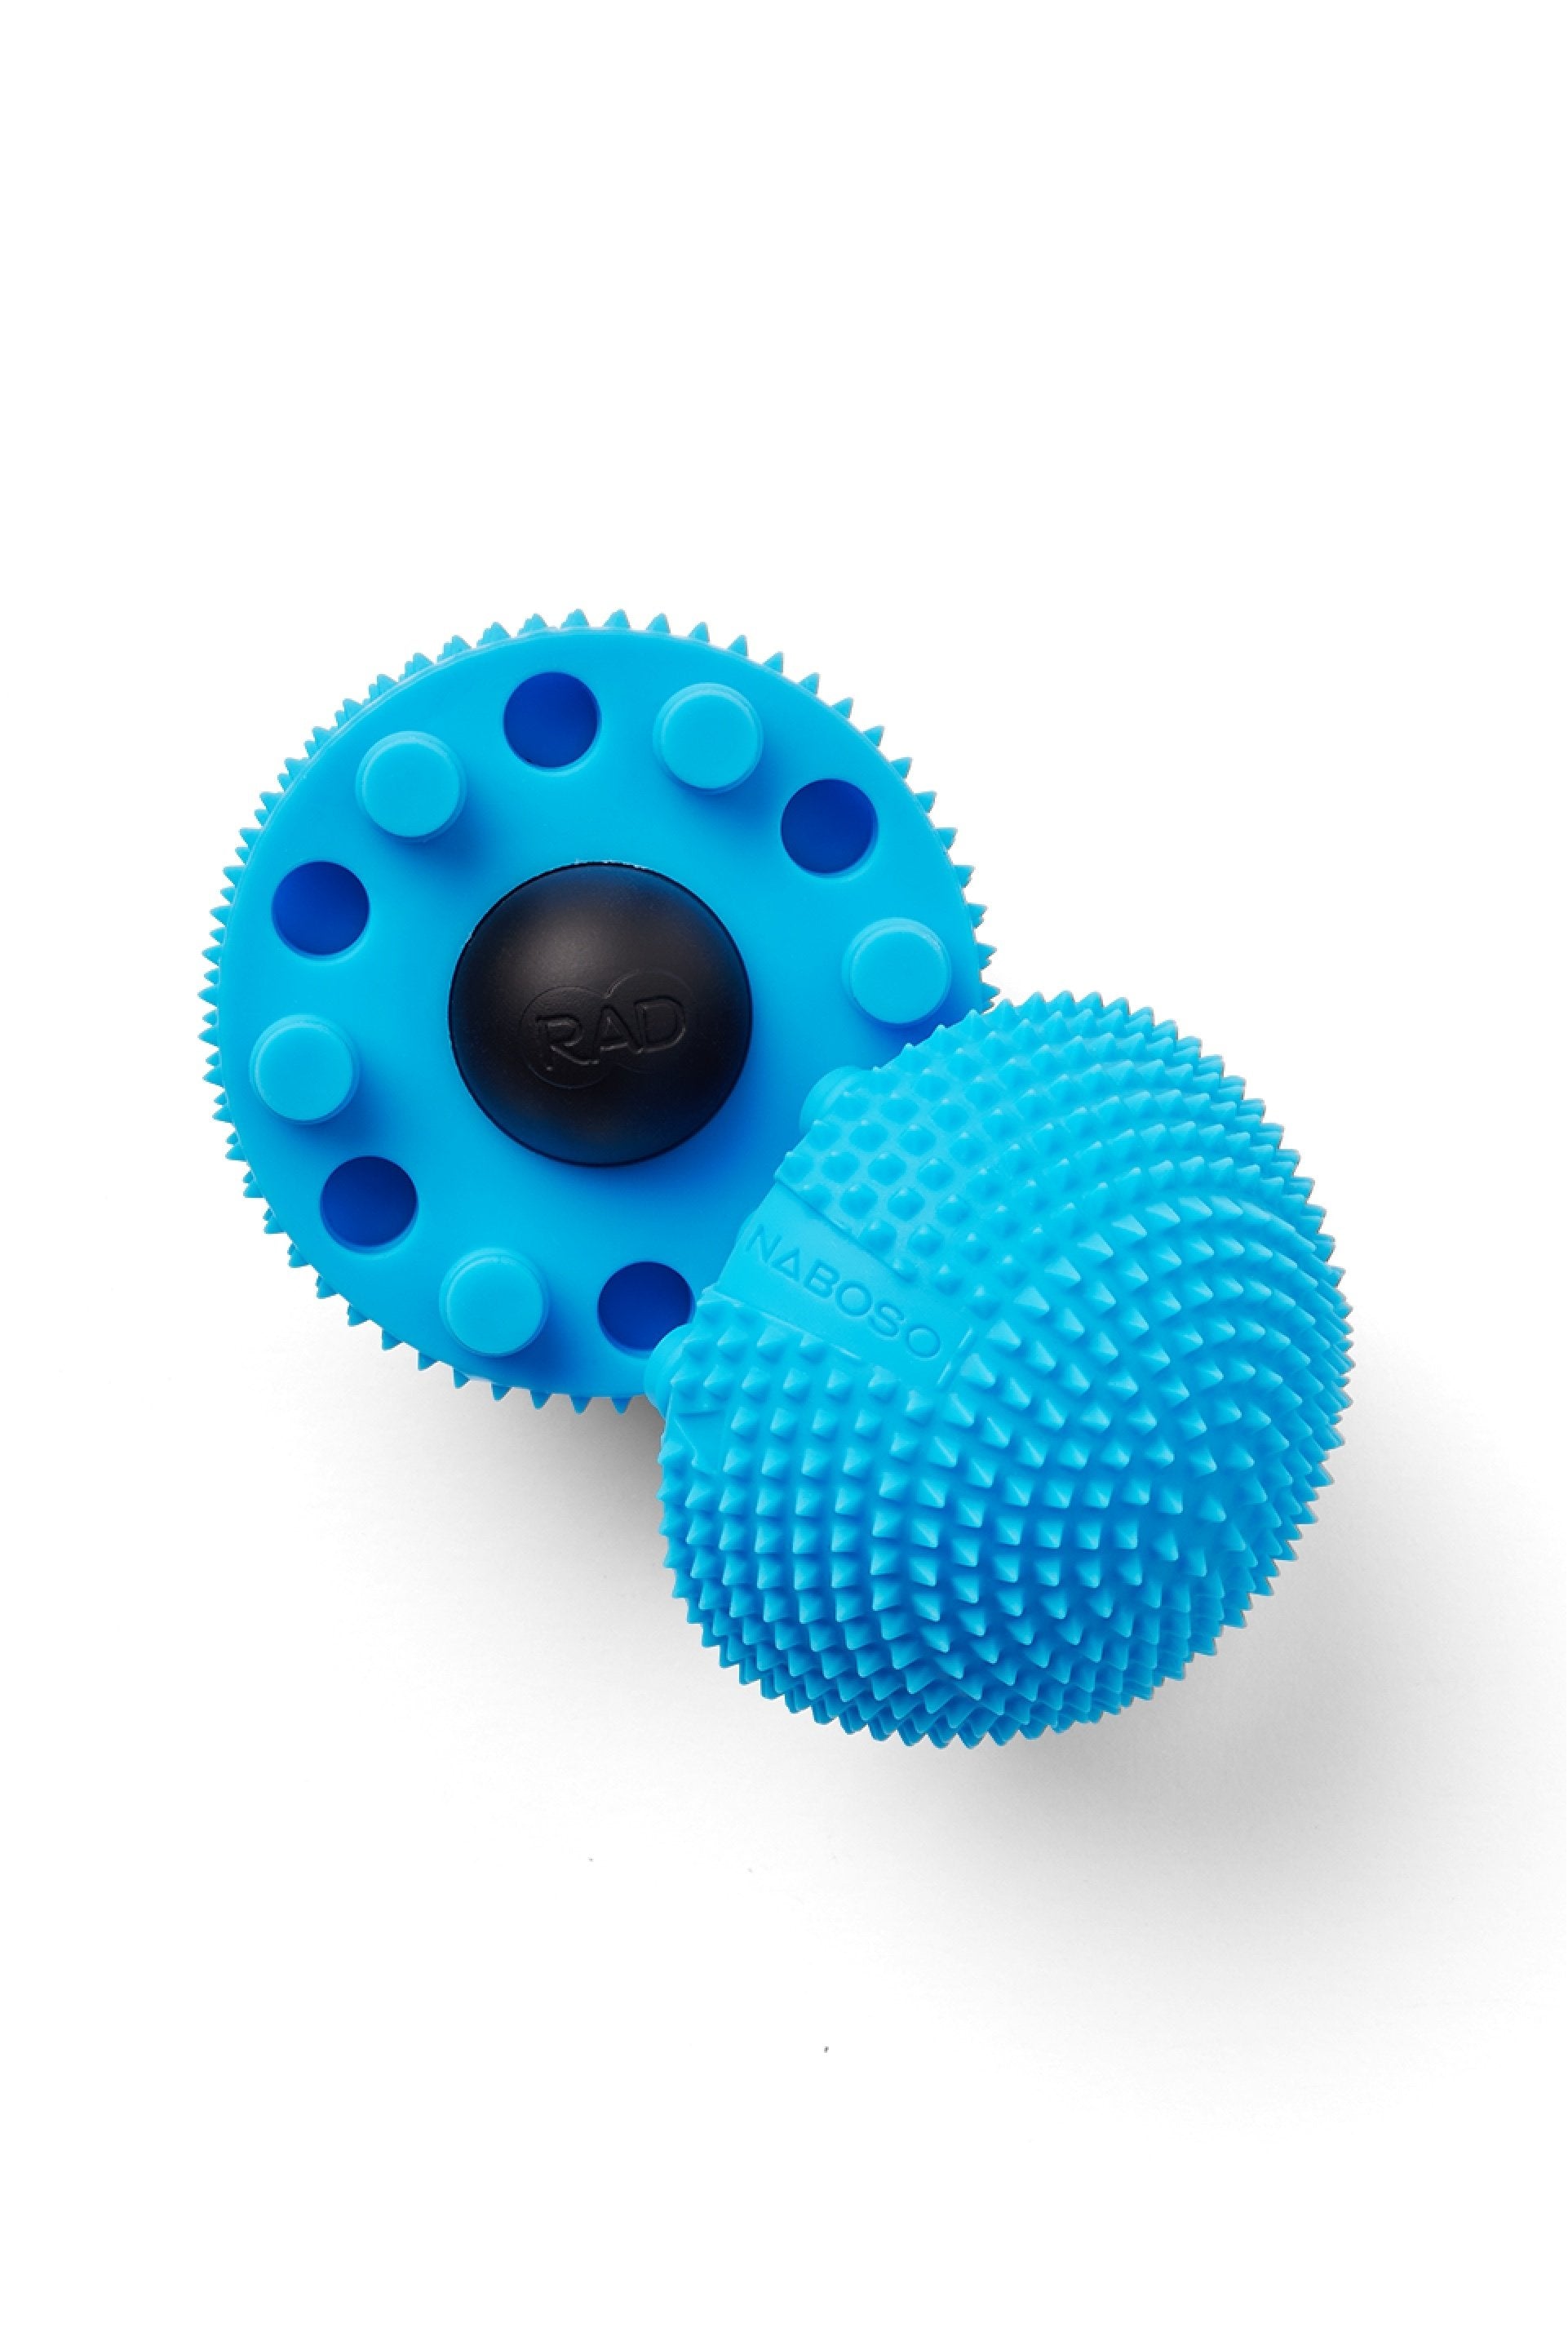 The blue Naboso neuro ball